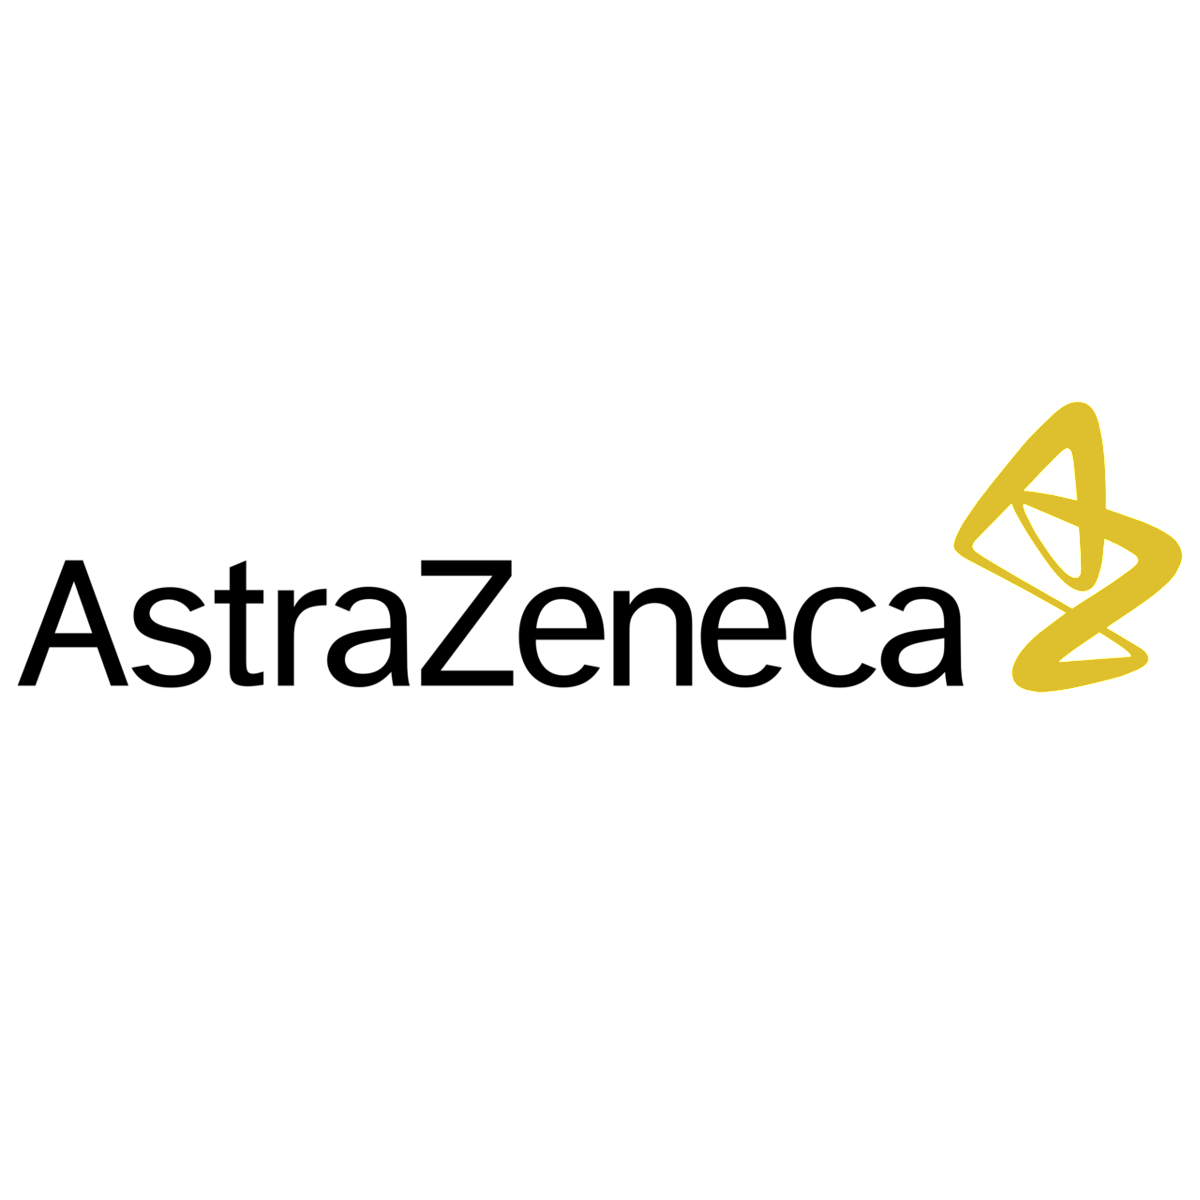 astrazeneca-logo.png